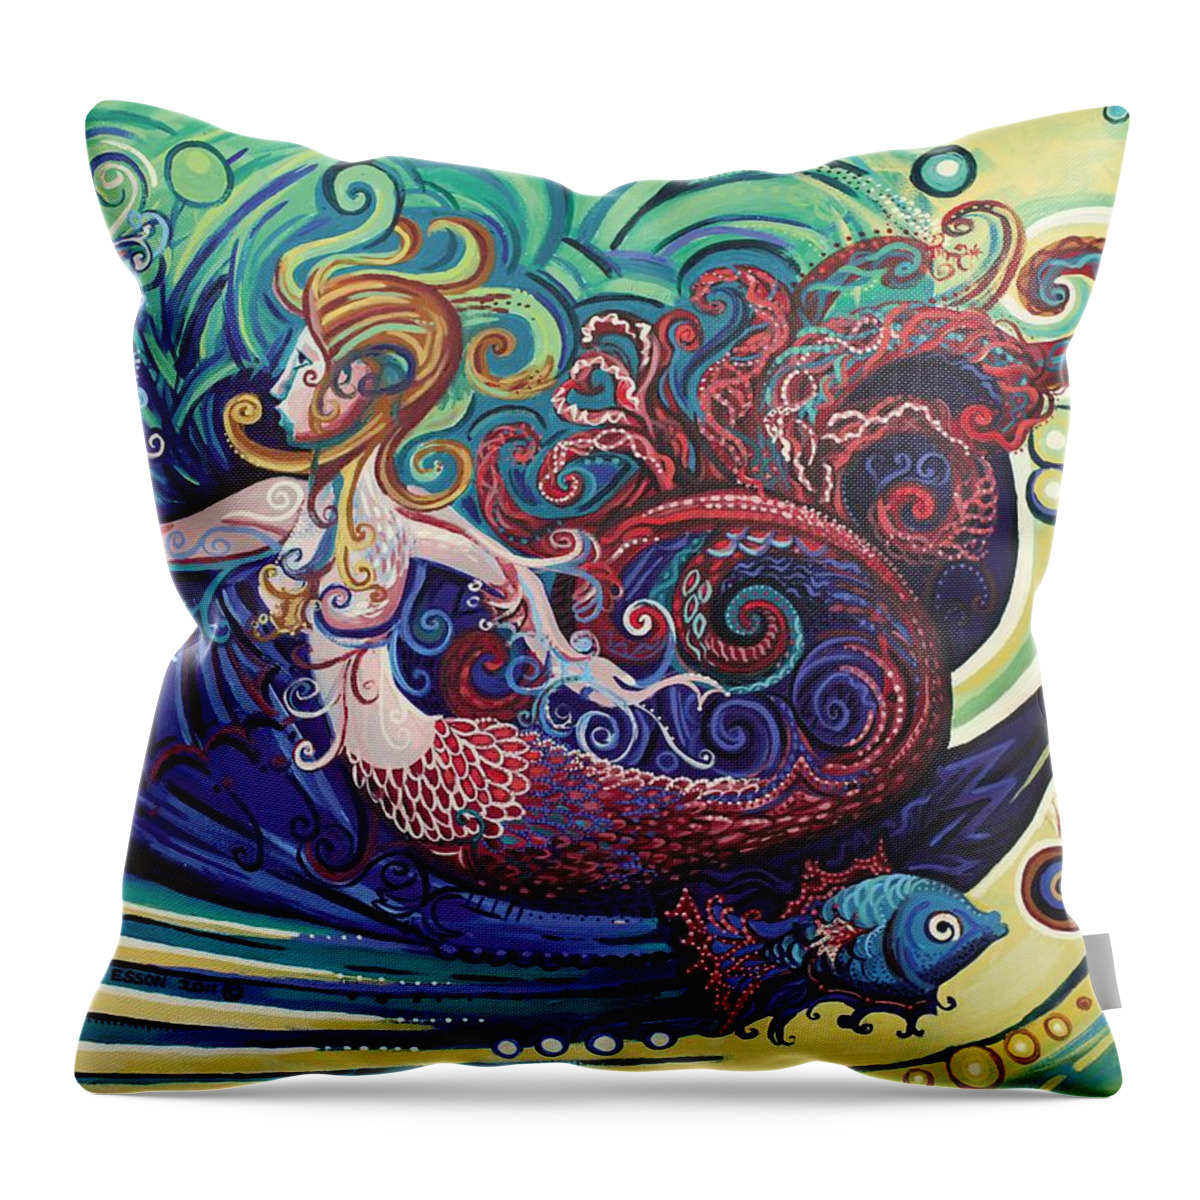 Mermaid Throw Pillow featuring the painting Mermaid Gargoyle by Genevieve Esson